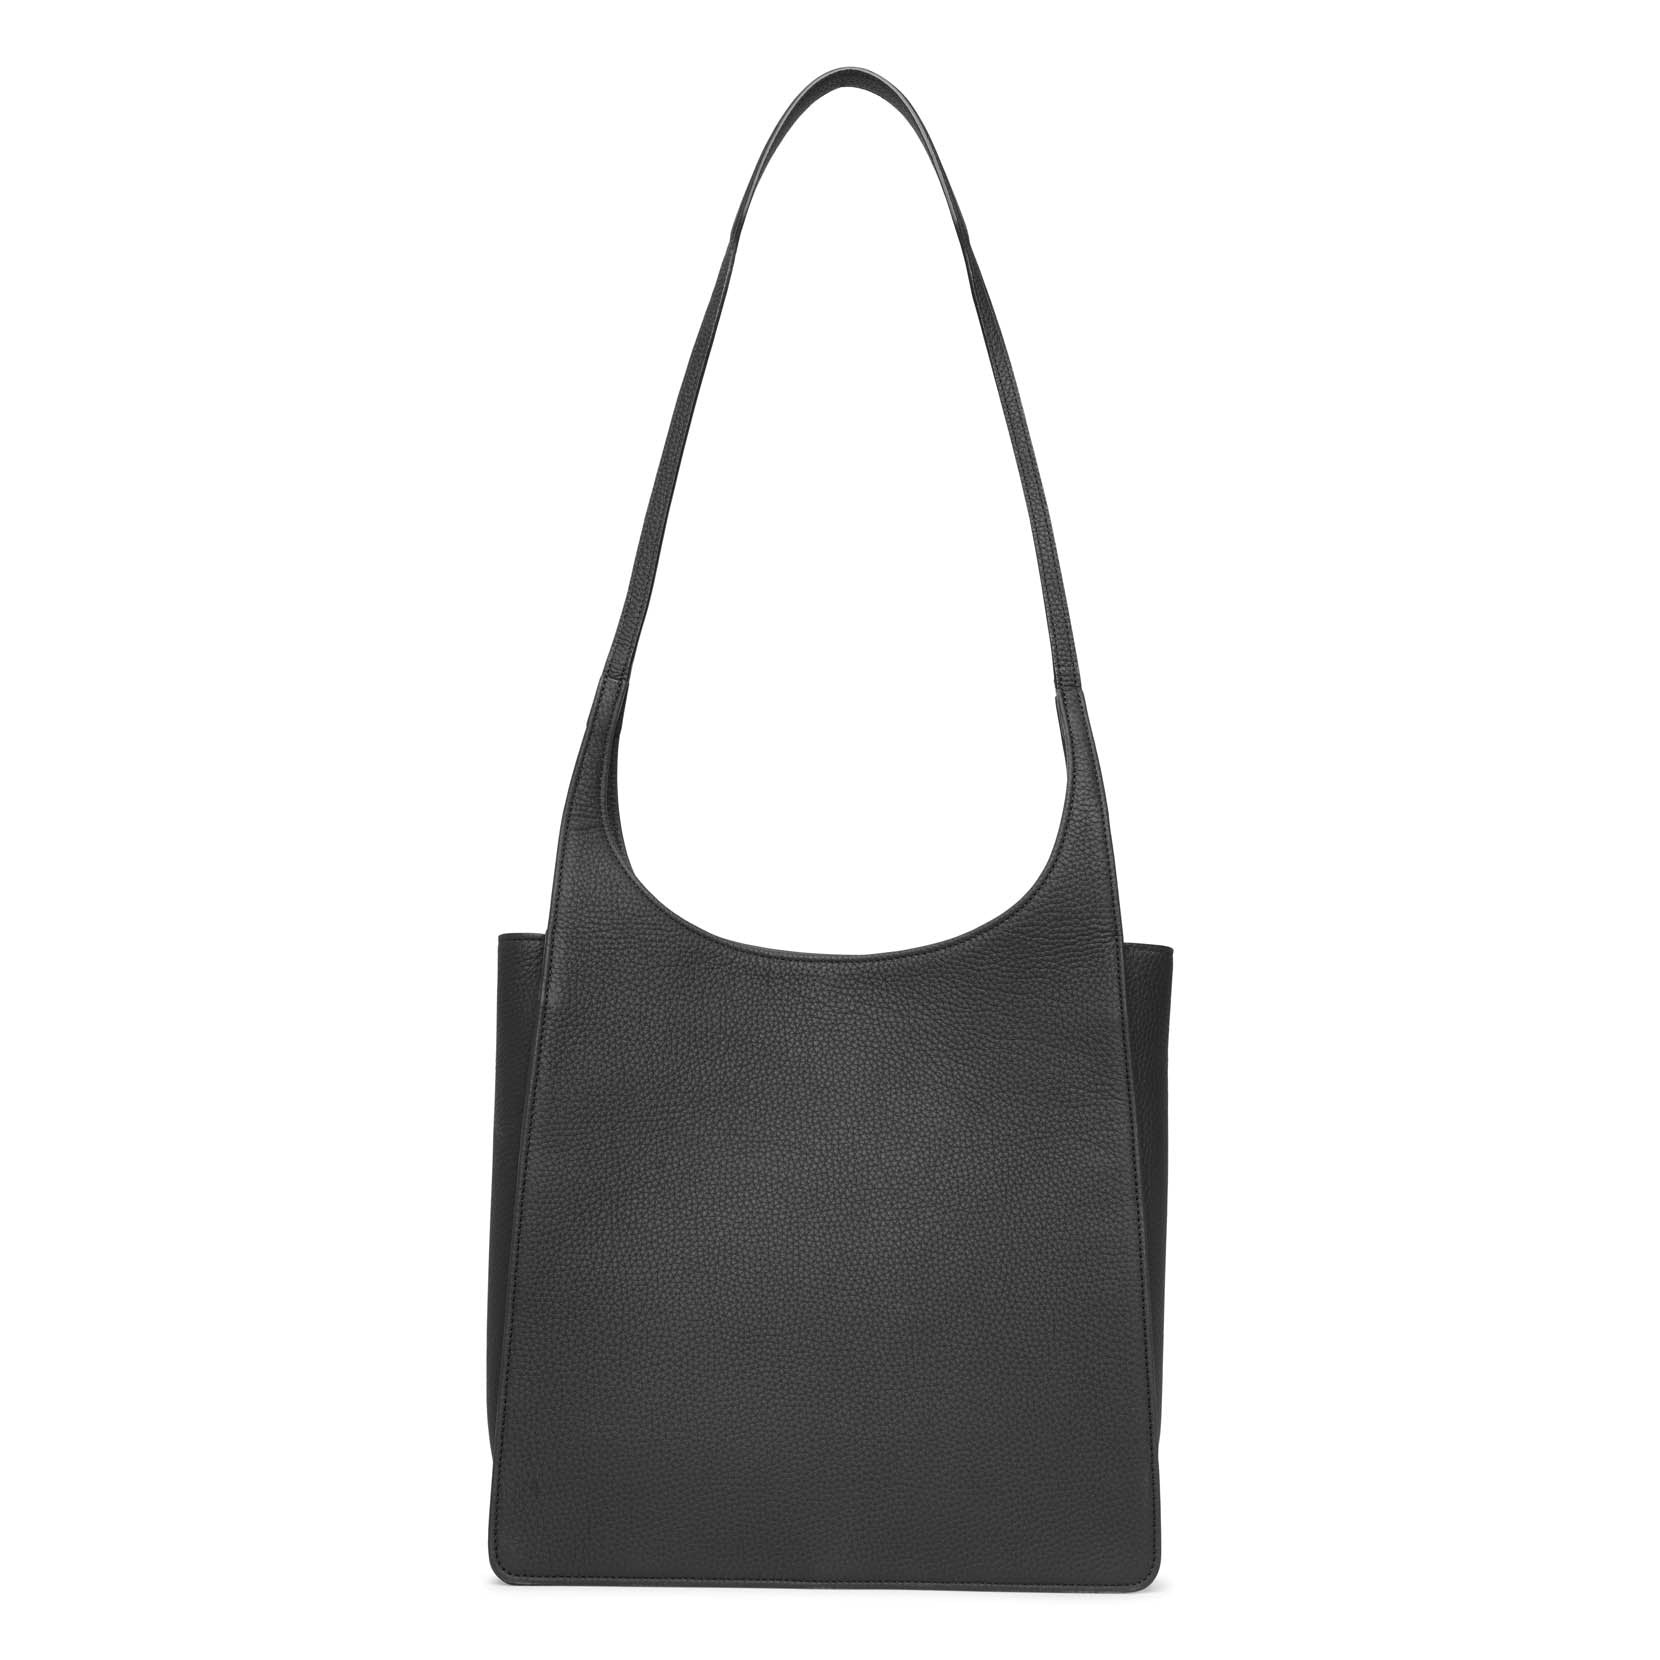 Jules black leather tote bag